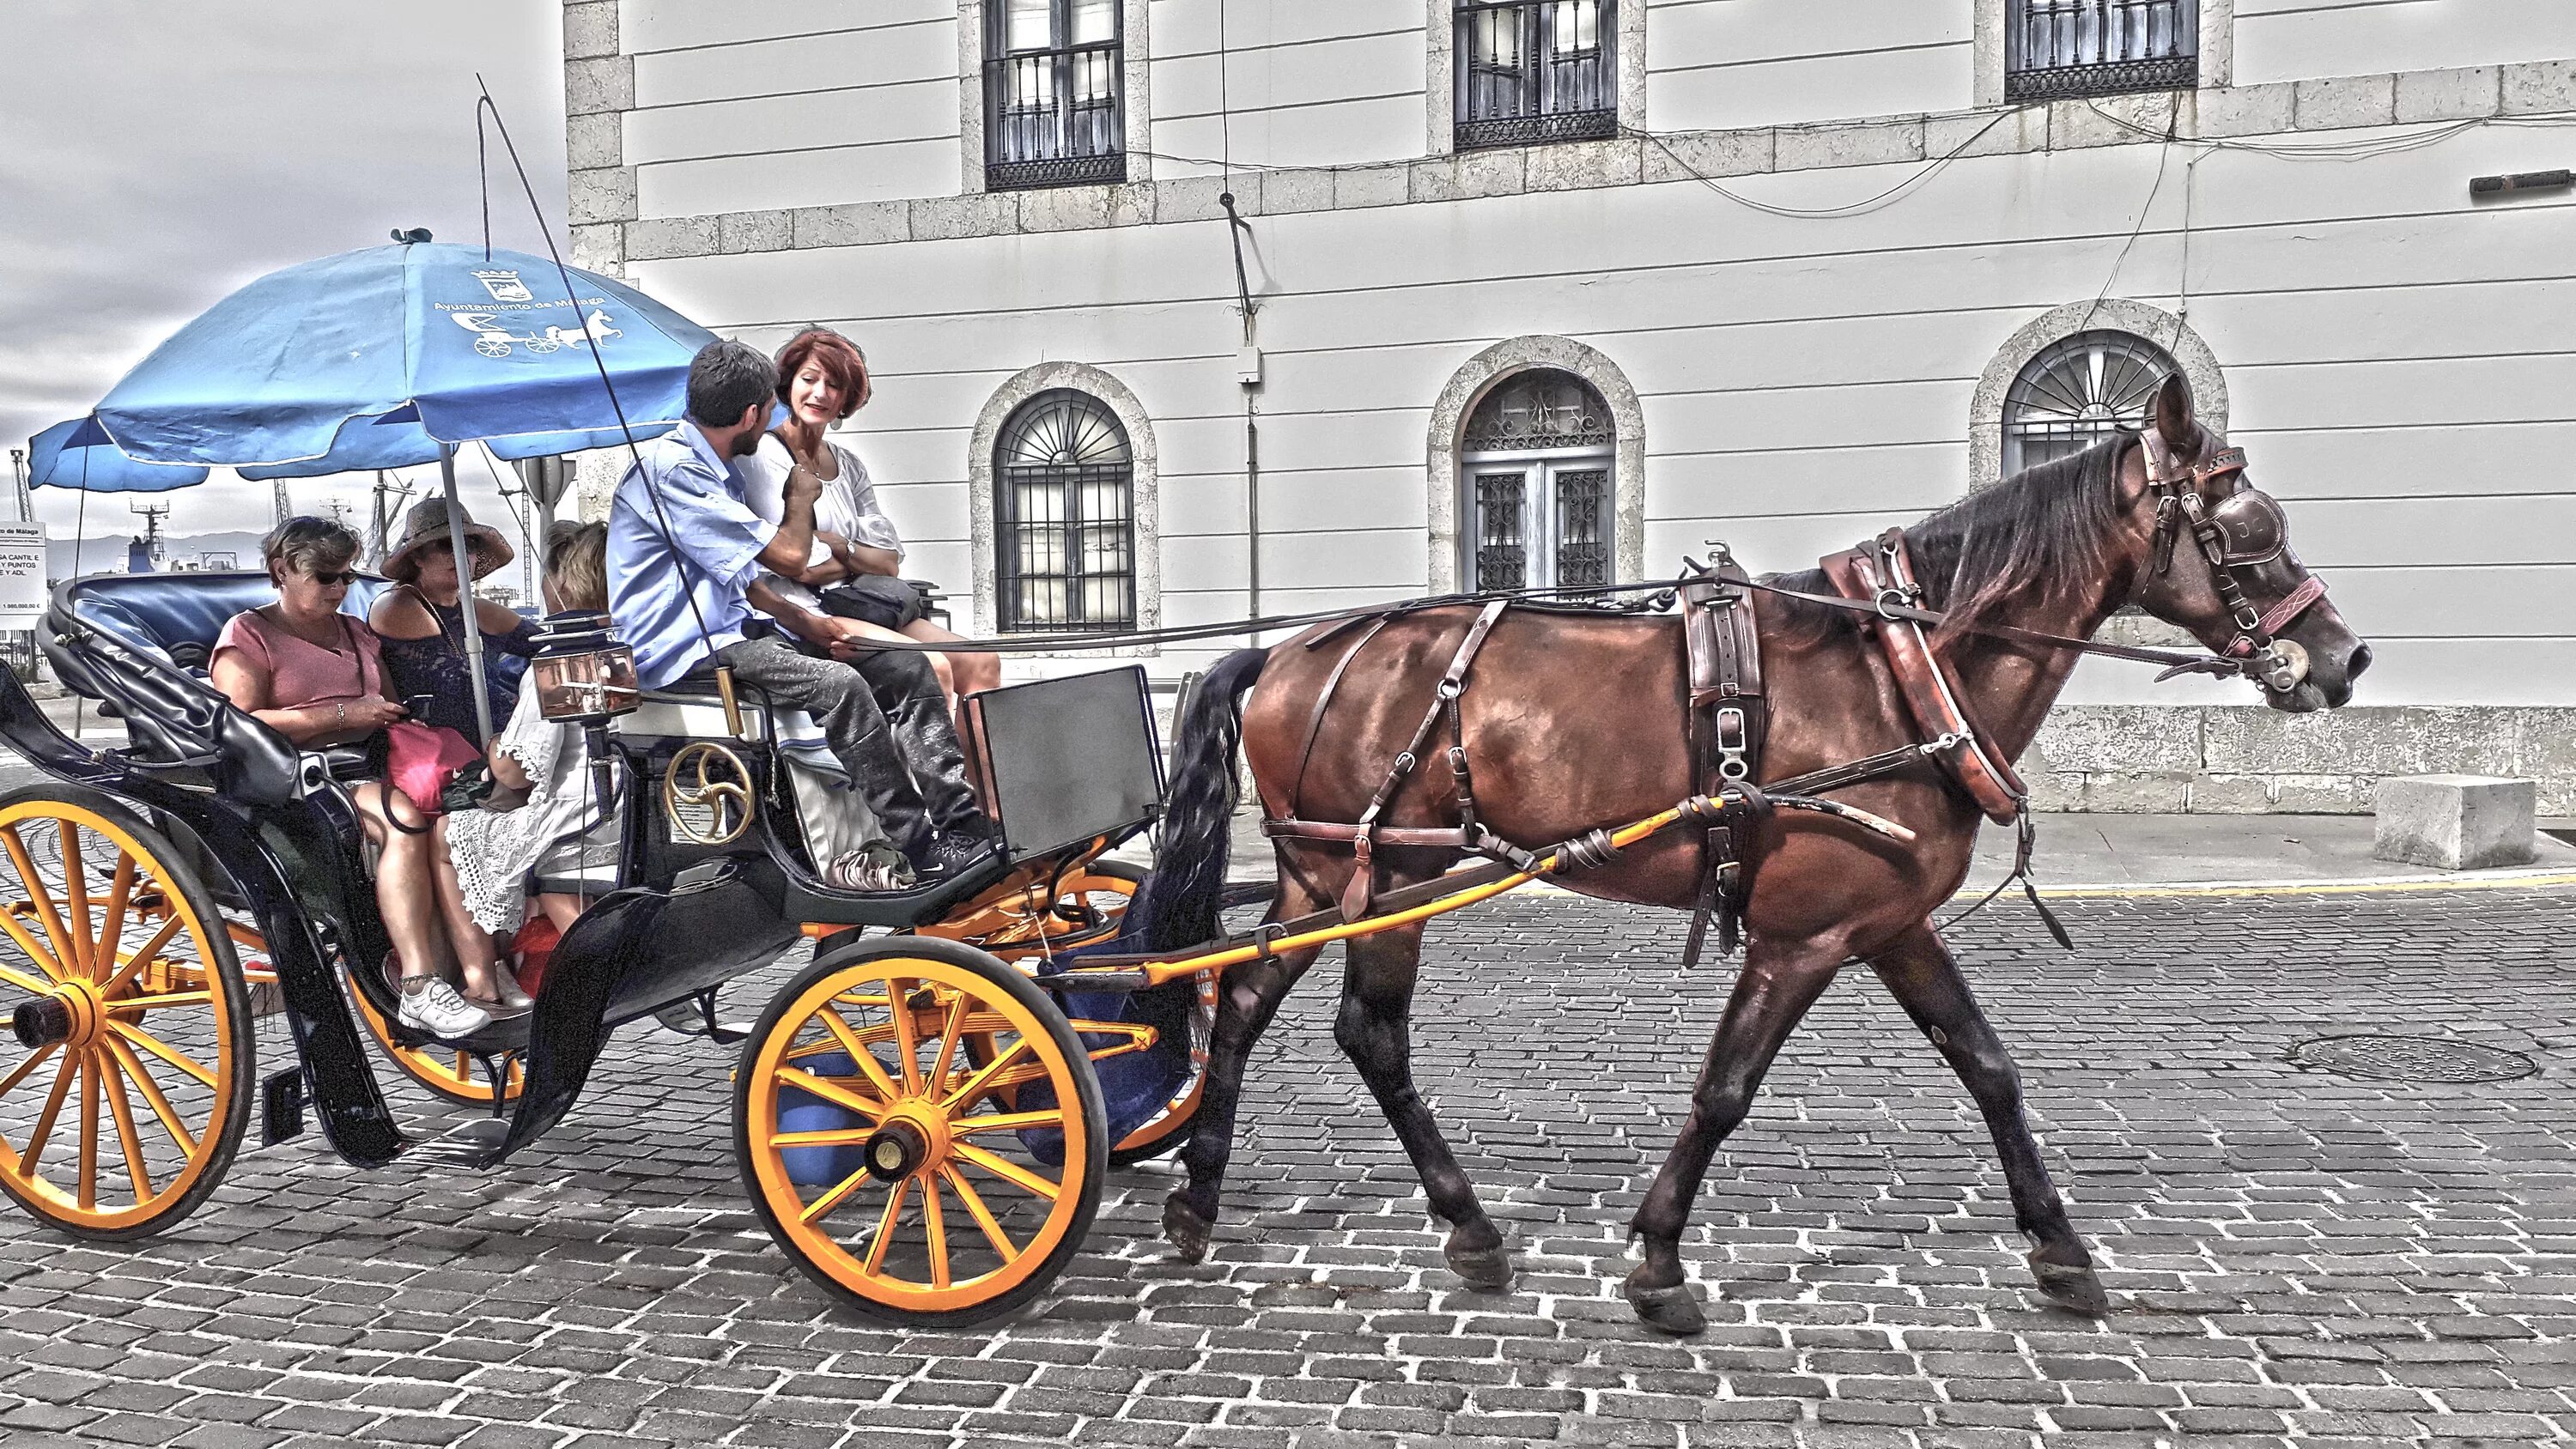 Фаэтон карета. Фаэтон конный экипаж. Фаэтон в России карета 19 век. Рыдван карета. Передвижение лошади